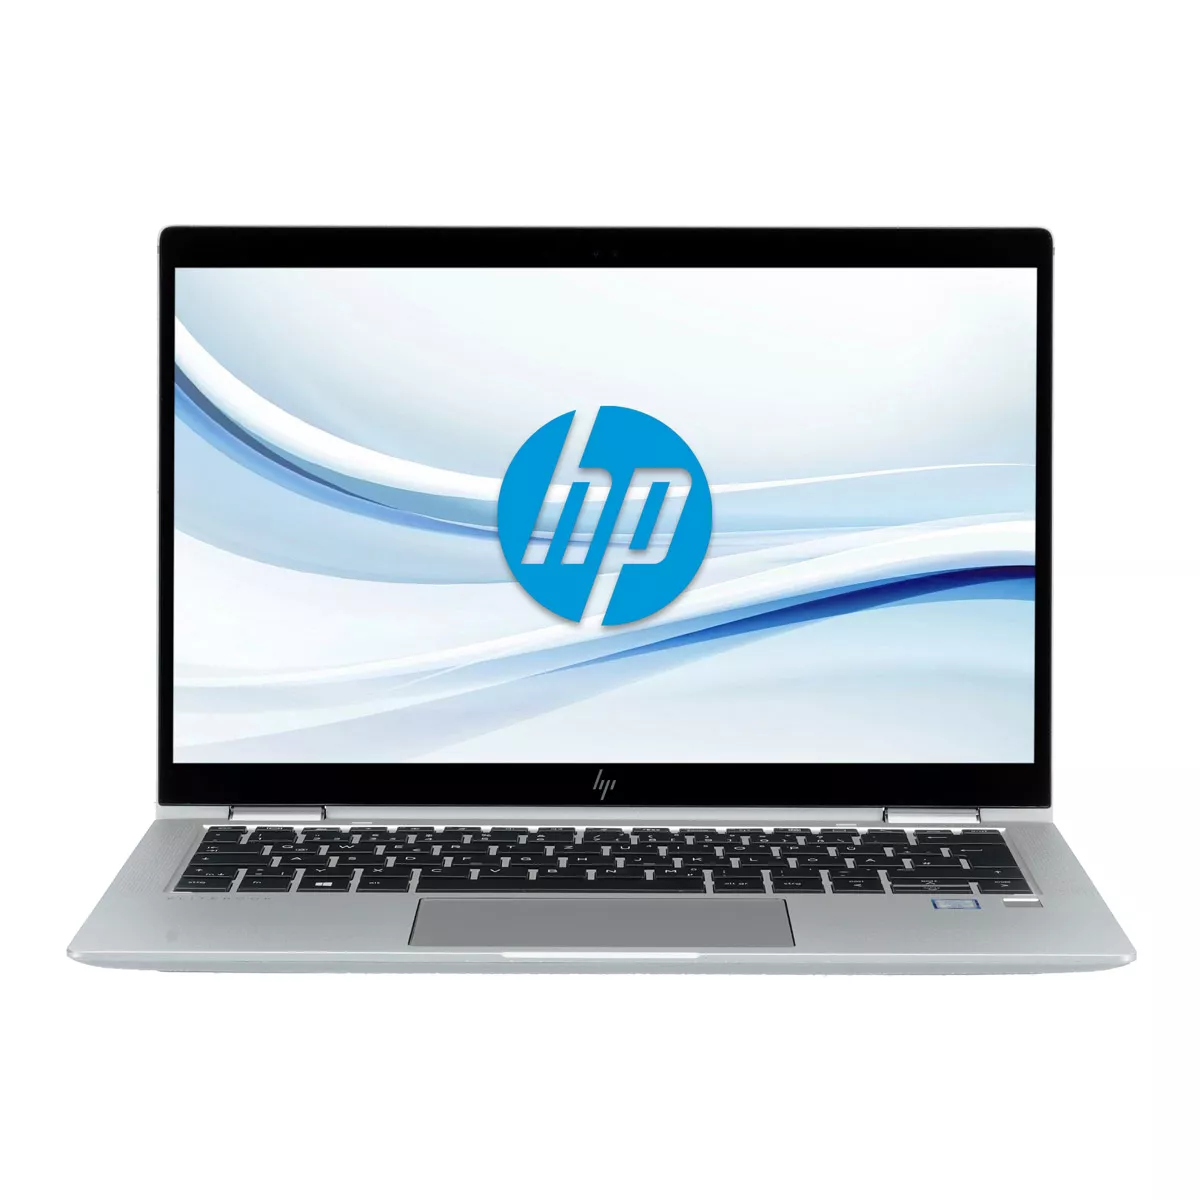 HP EliteBook x360 1030 G4 Core i7 8665U Full-HD Touch 16 GB 500 GB M.2 nVME SSD Webcam B